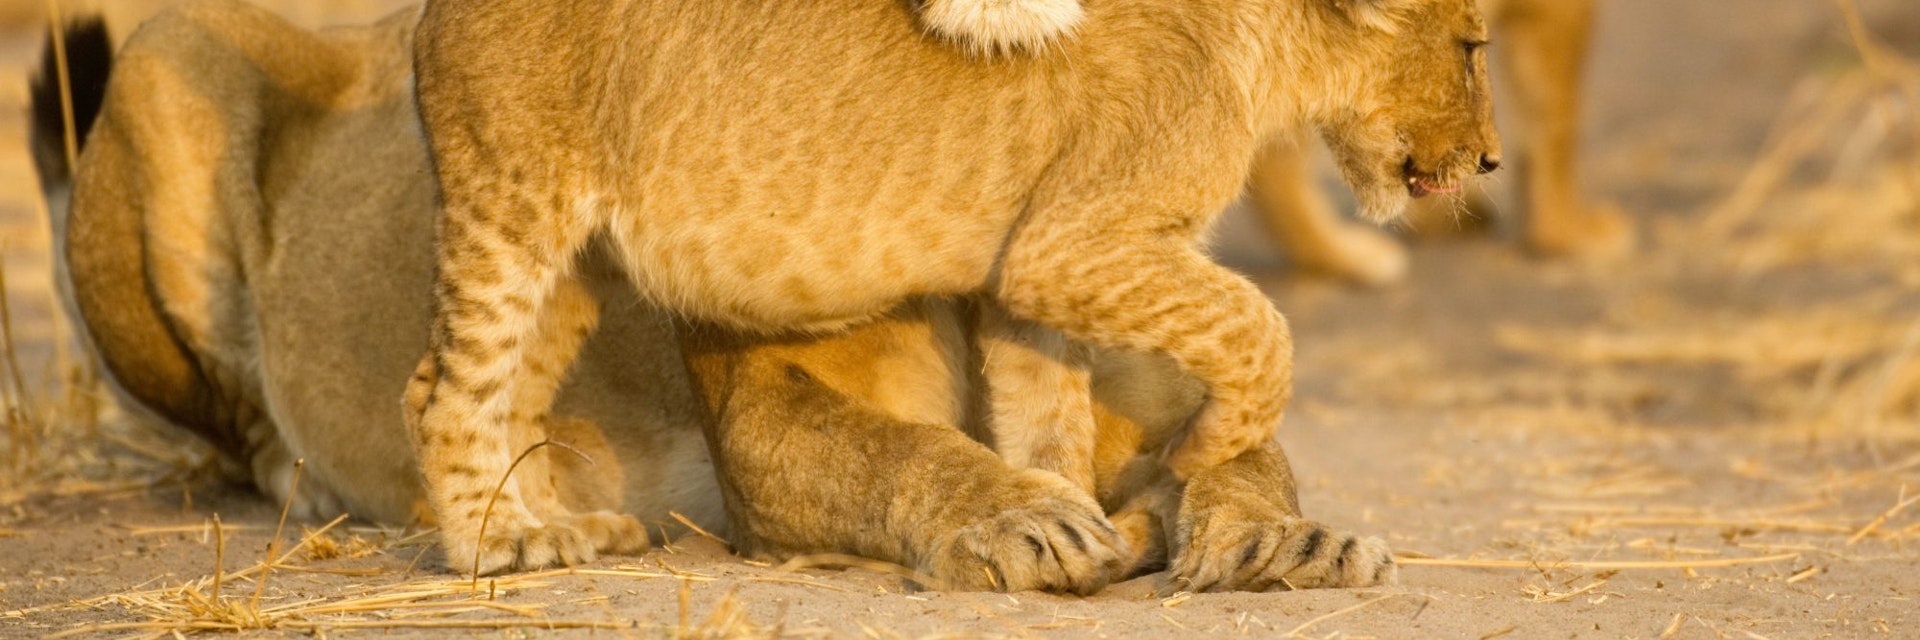 Katavi National Park, Tanzania
Lioness (Panthera leo) resting chin on cub's back - stock photo

